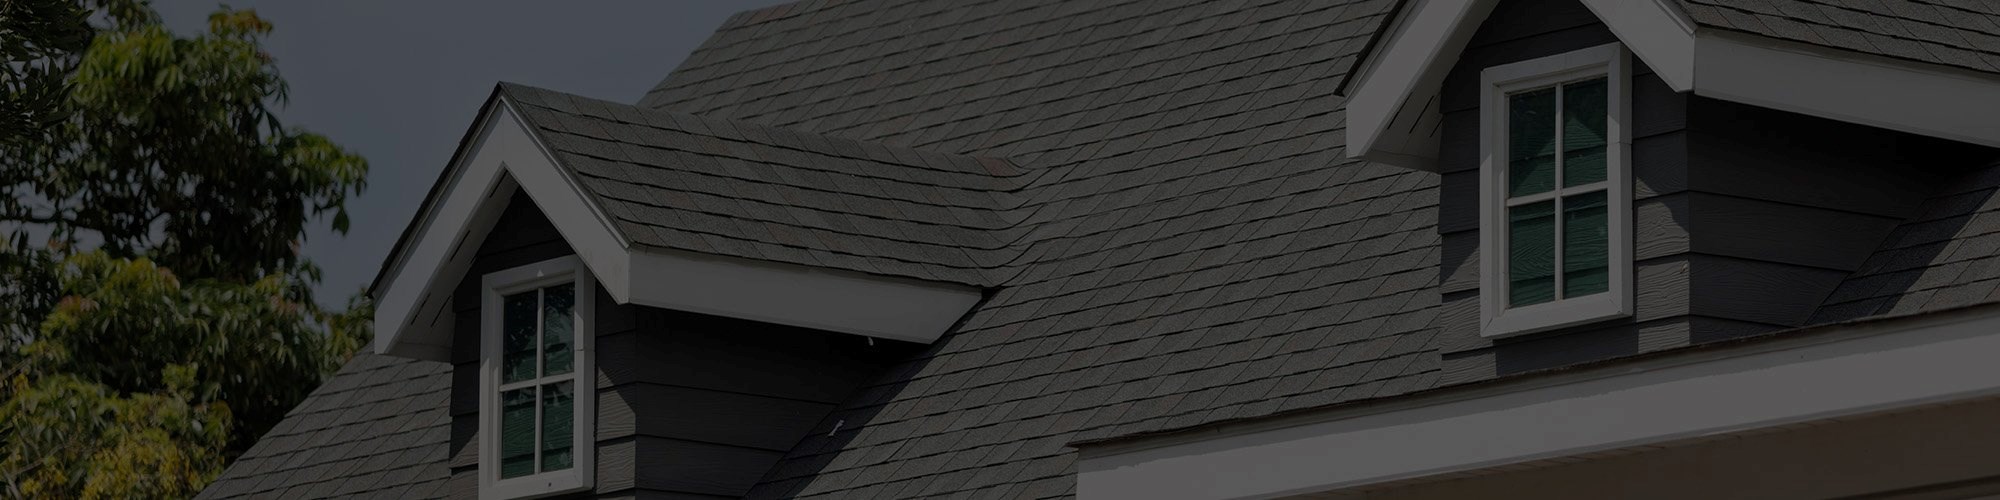 Asphalt roof installation on two story home in New Bedford, Massachusetts